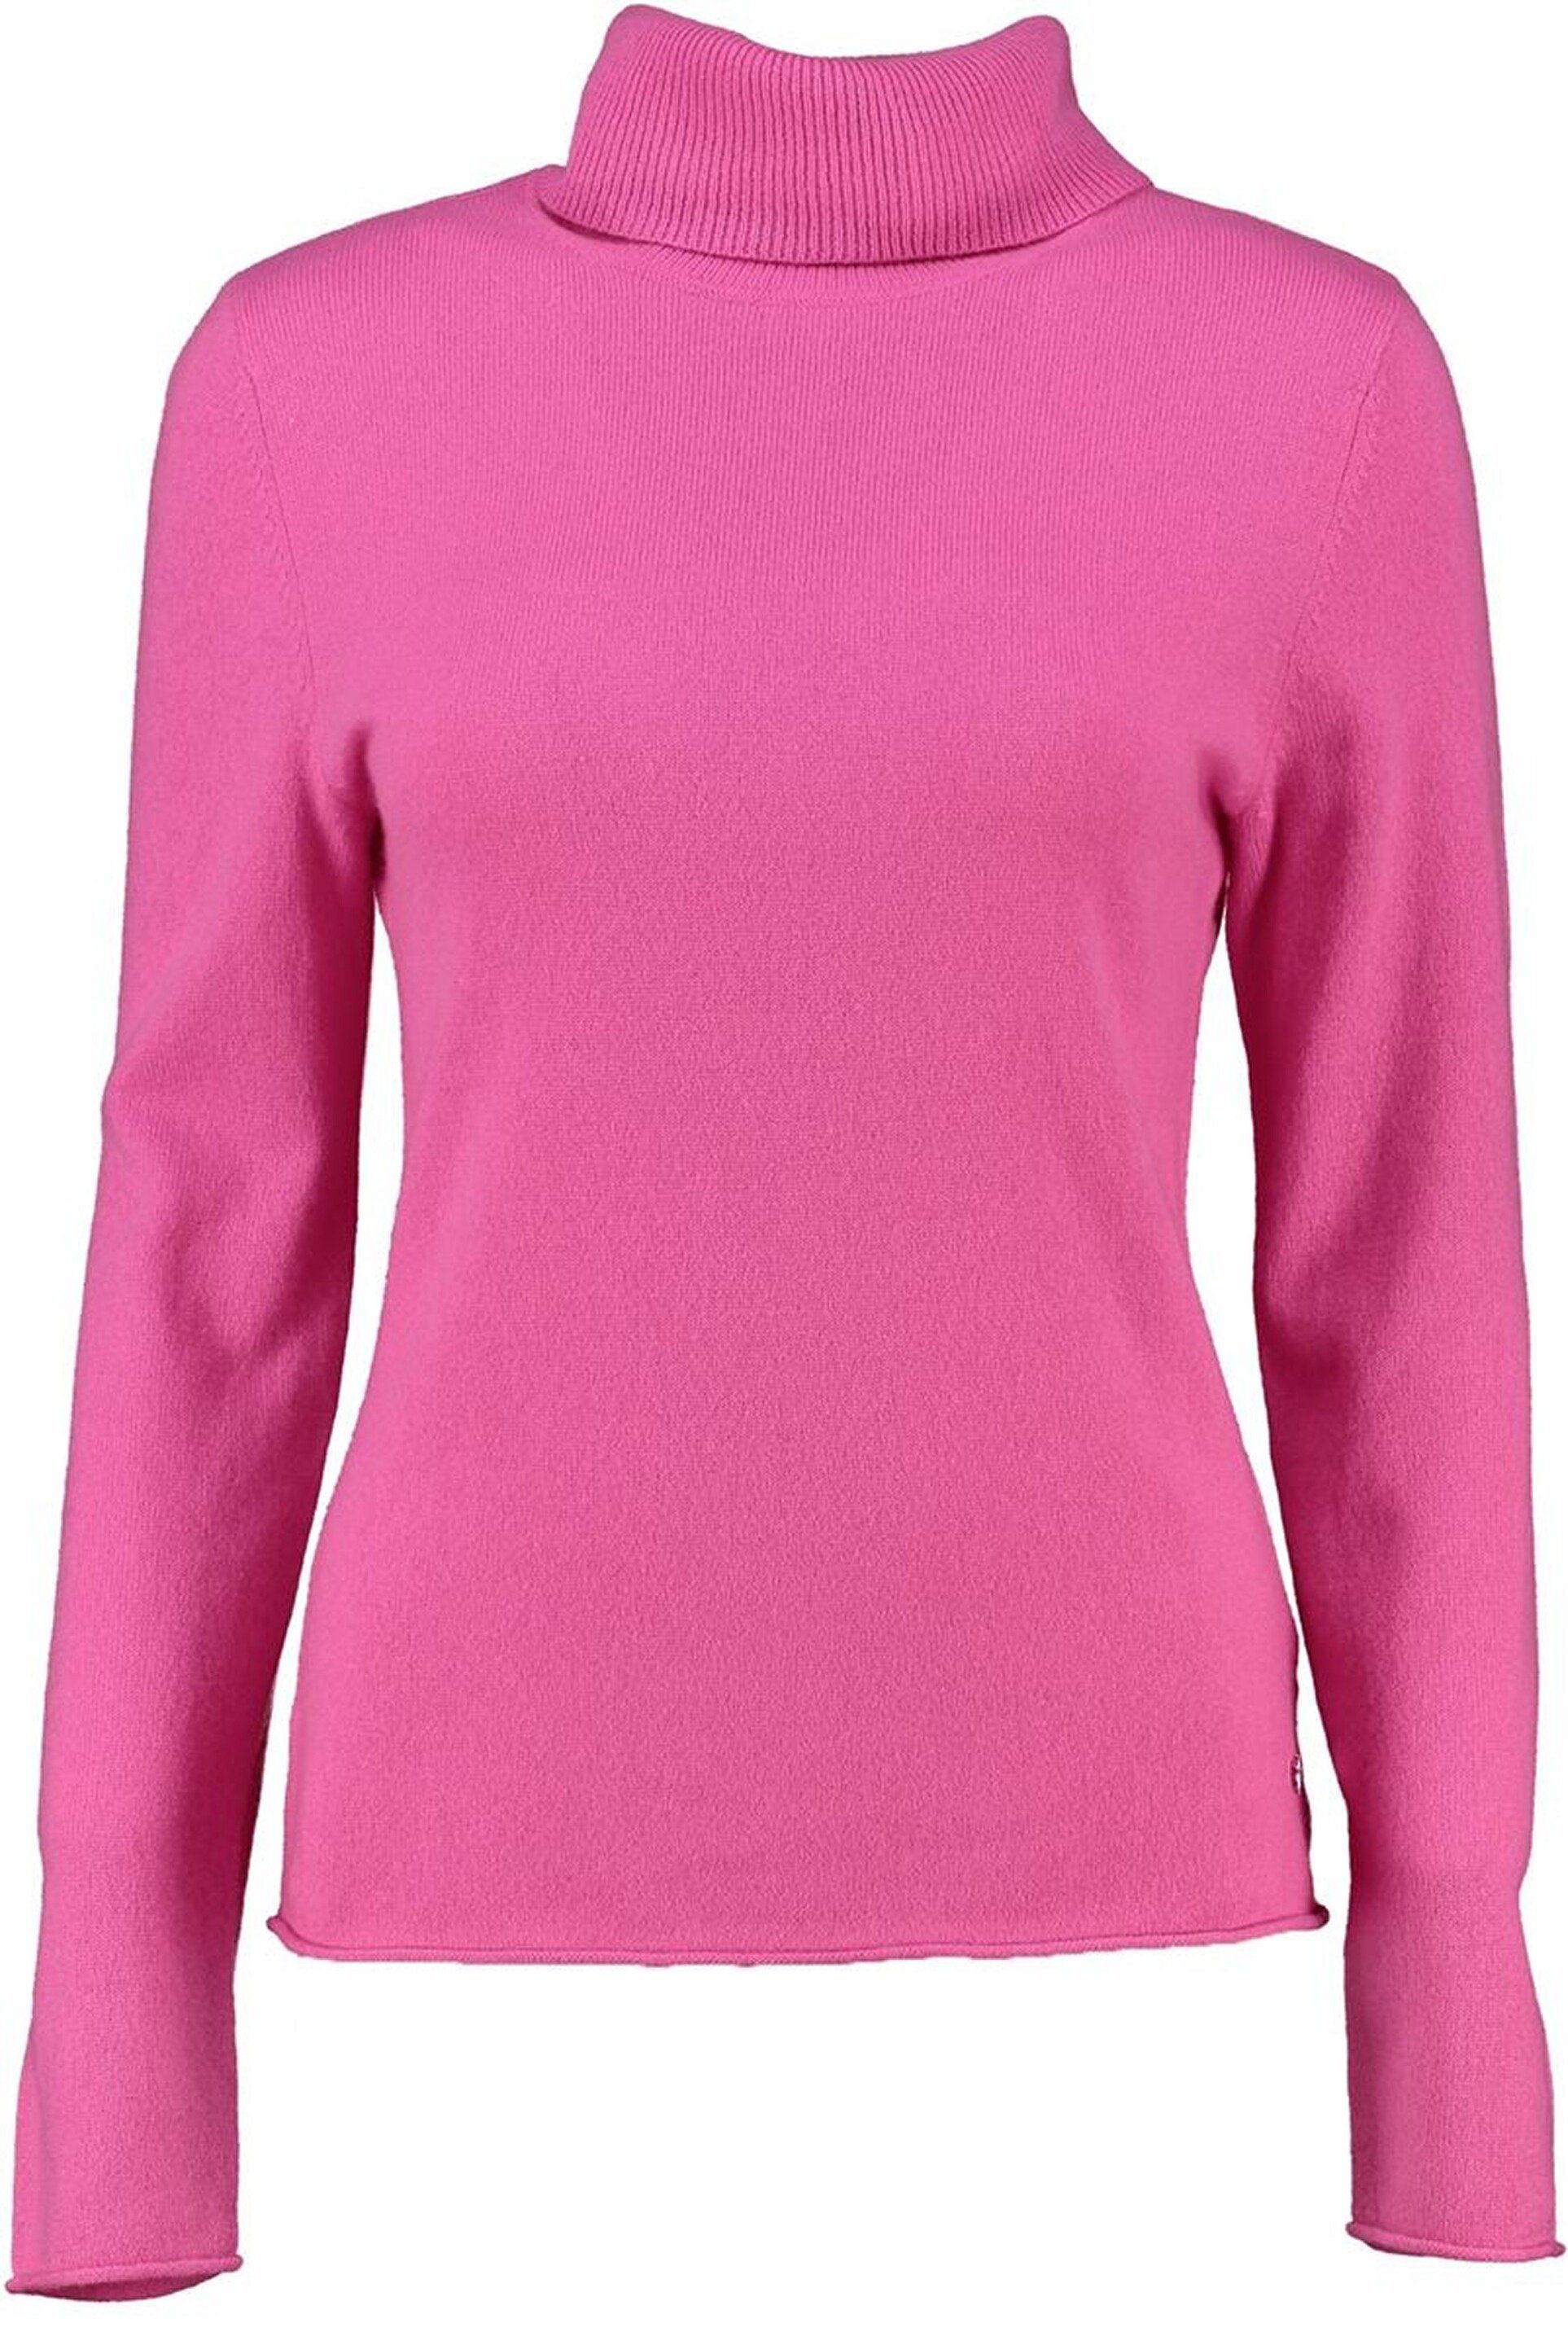 Kaschmir FYNCH HATTON Rollkragen-Pullover hochwertigem aus FYNCH-HATTON Rollkragenpullover pink